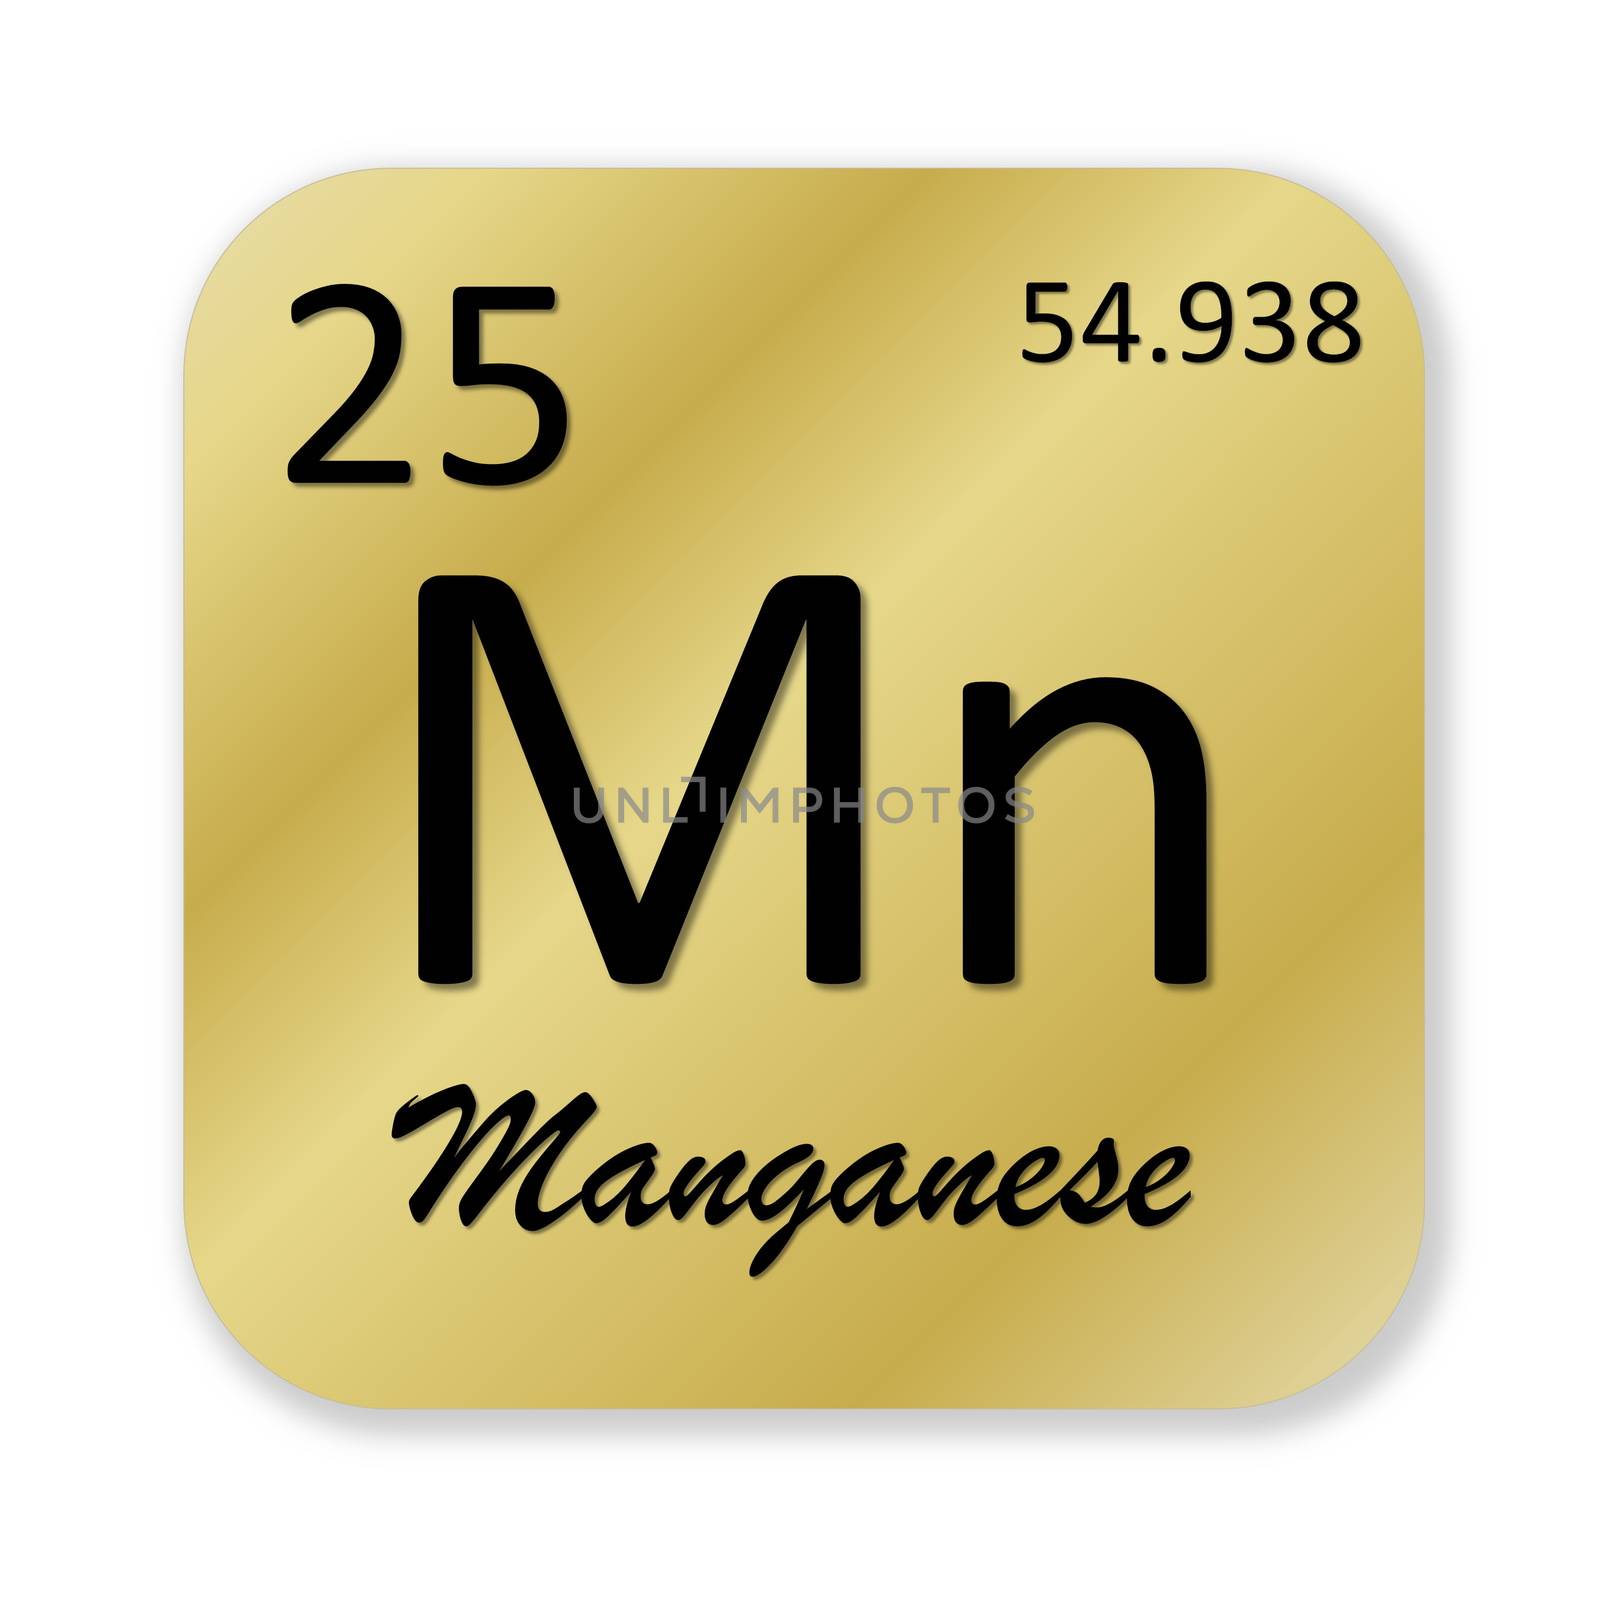 Manganese element by Elenaphotos21